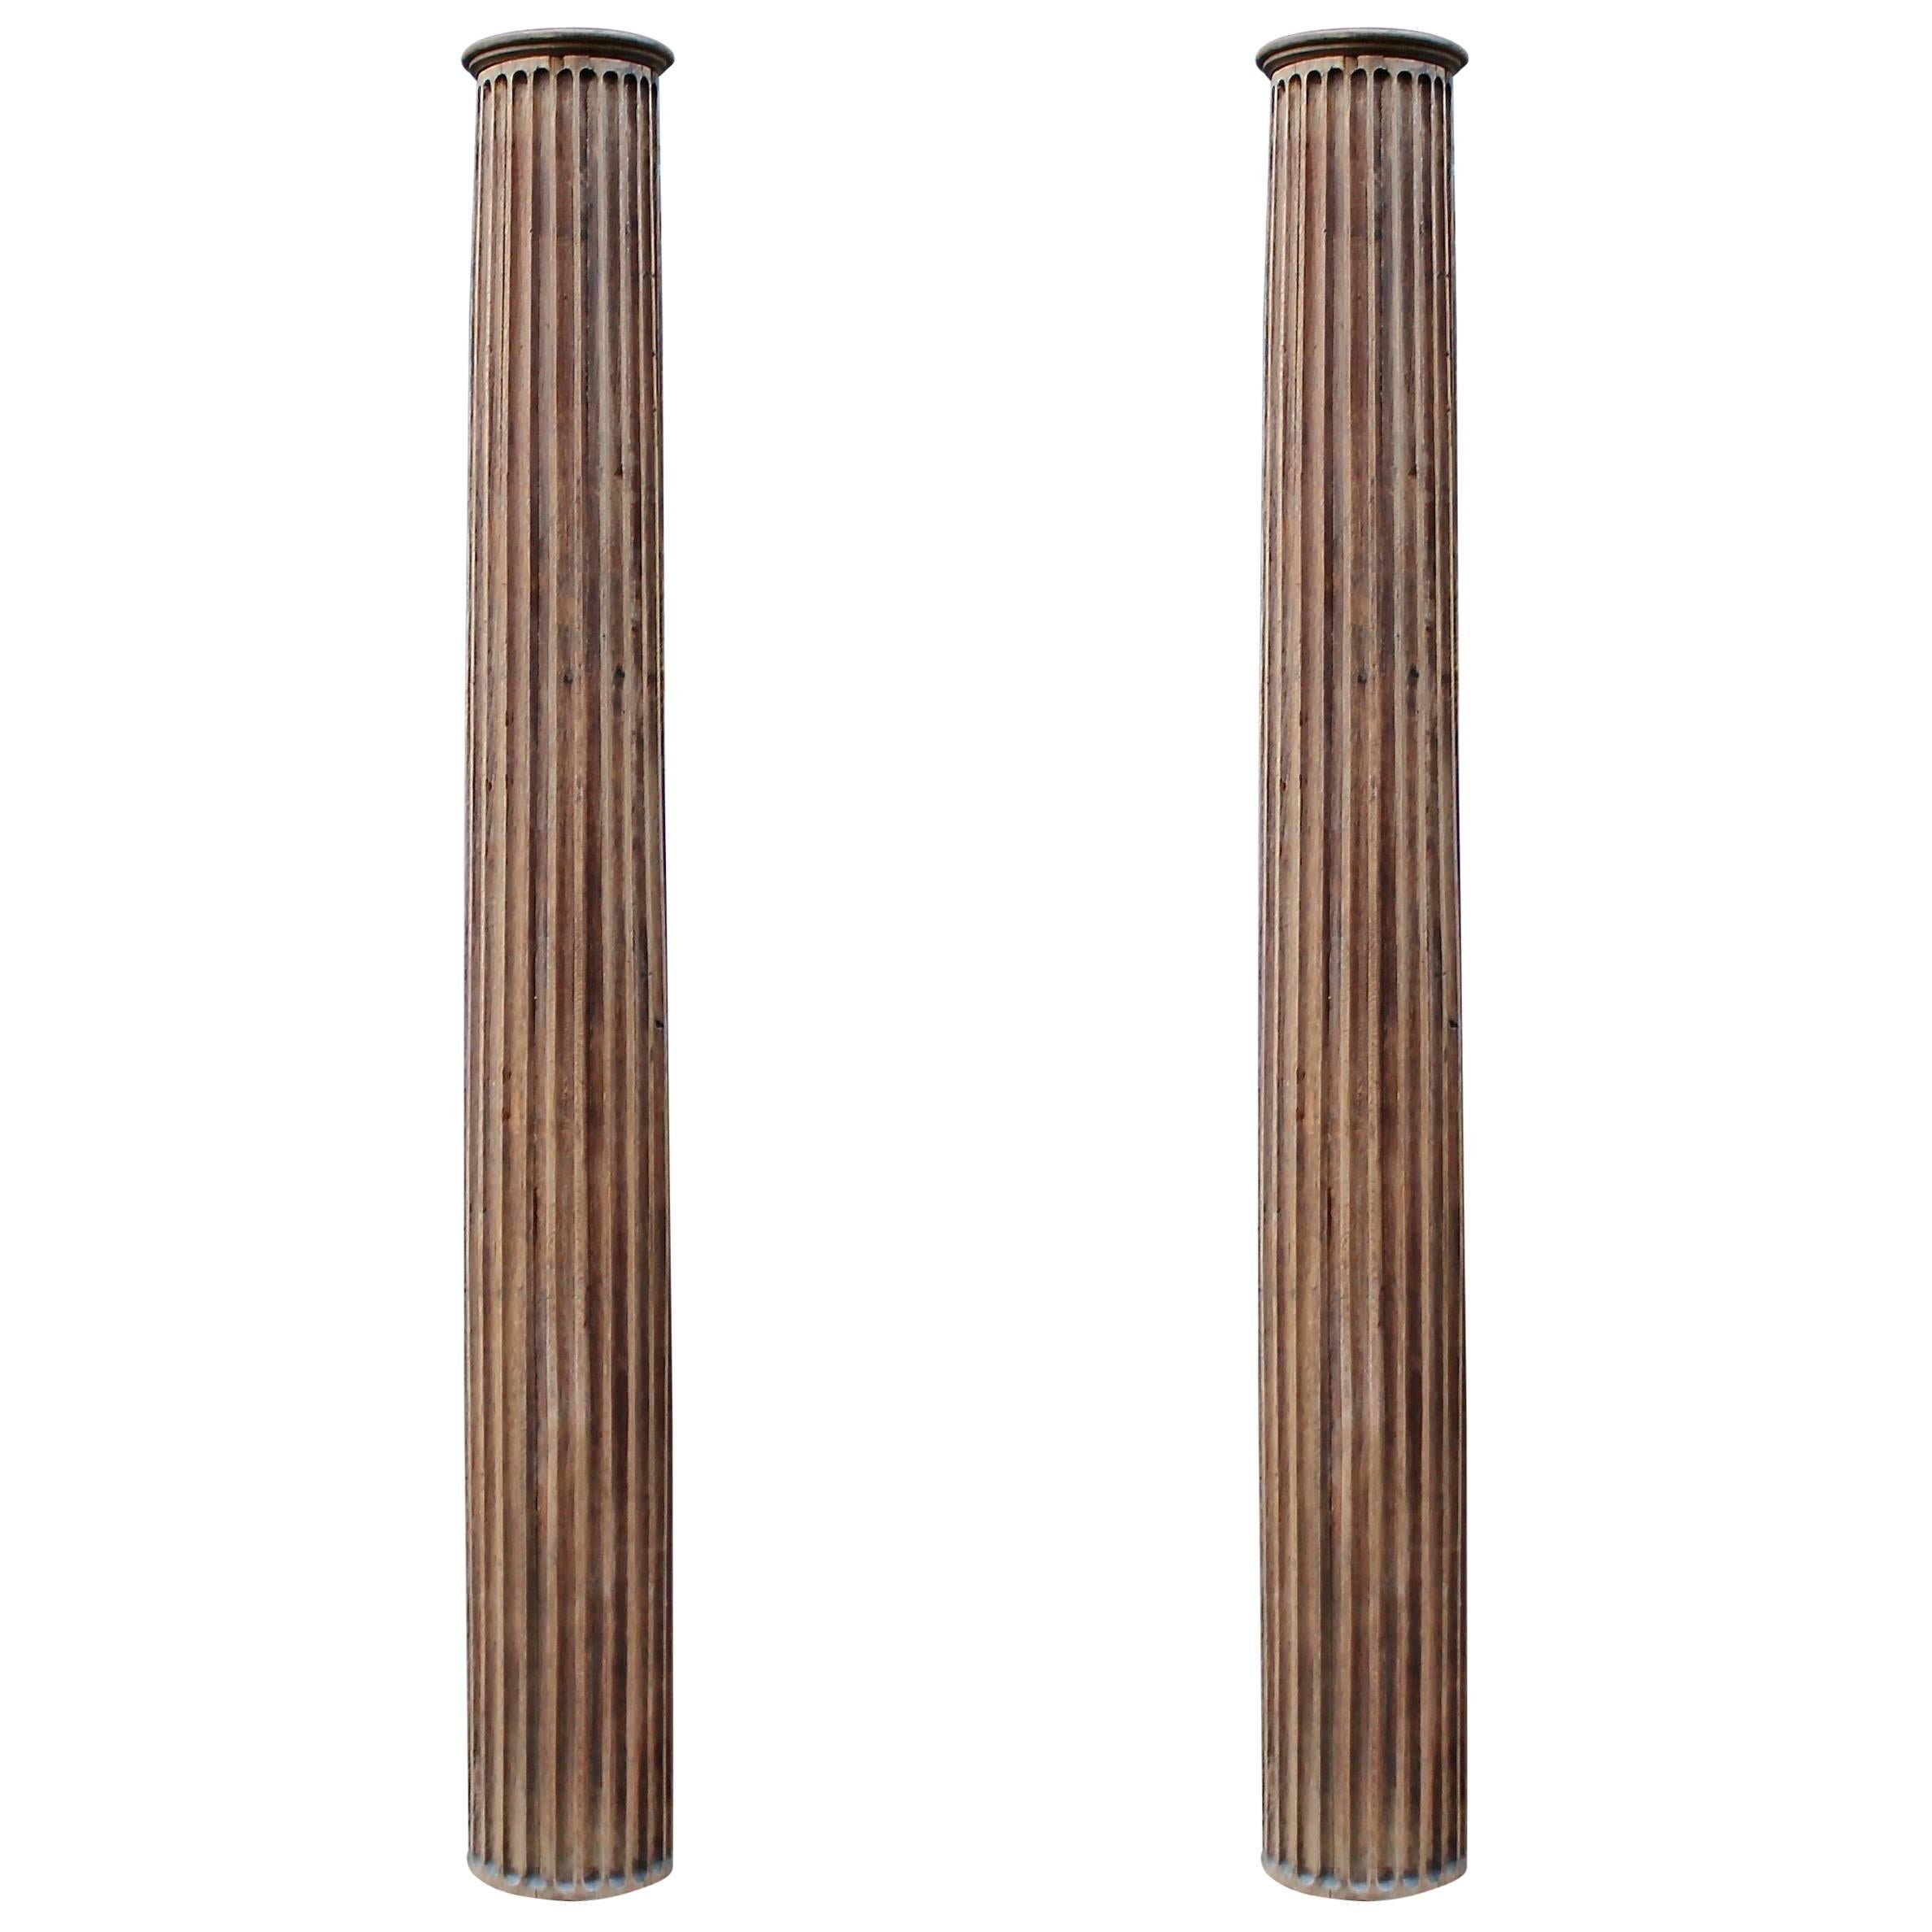 Pair of 19th C. Decorative Wooden Columns 